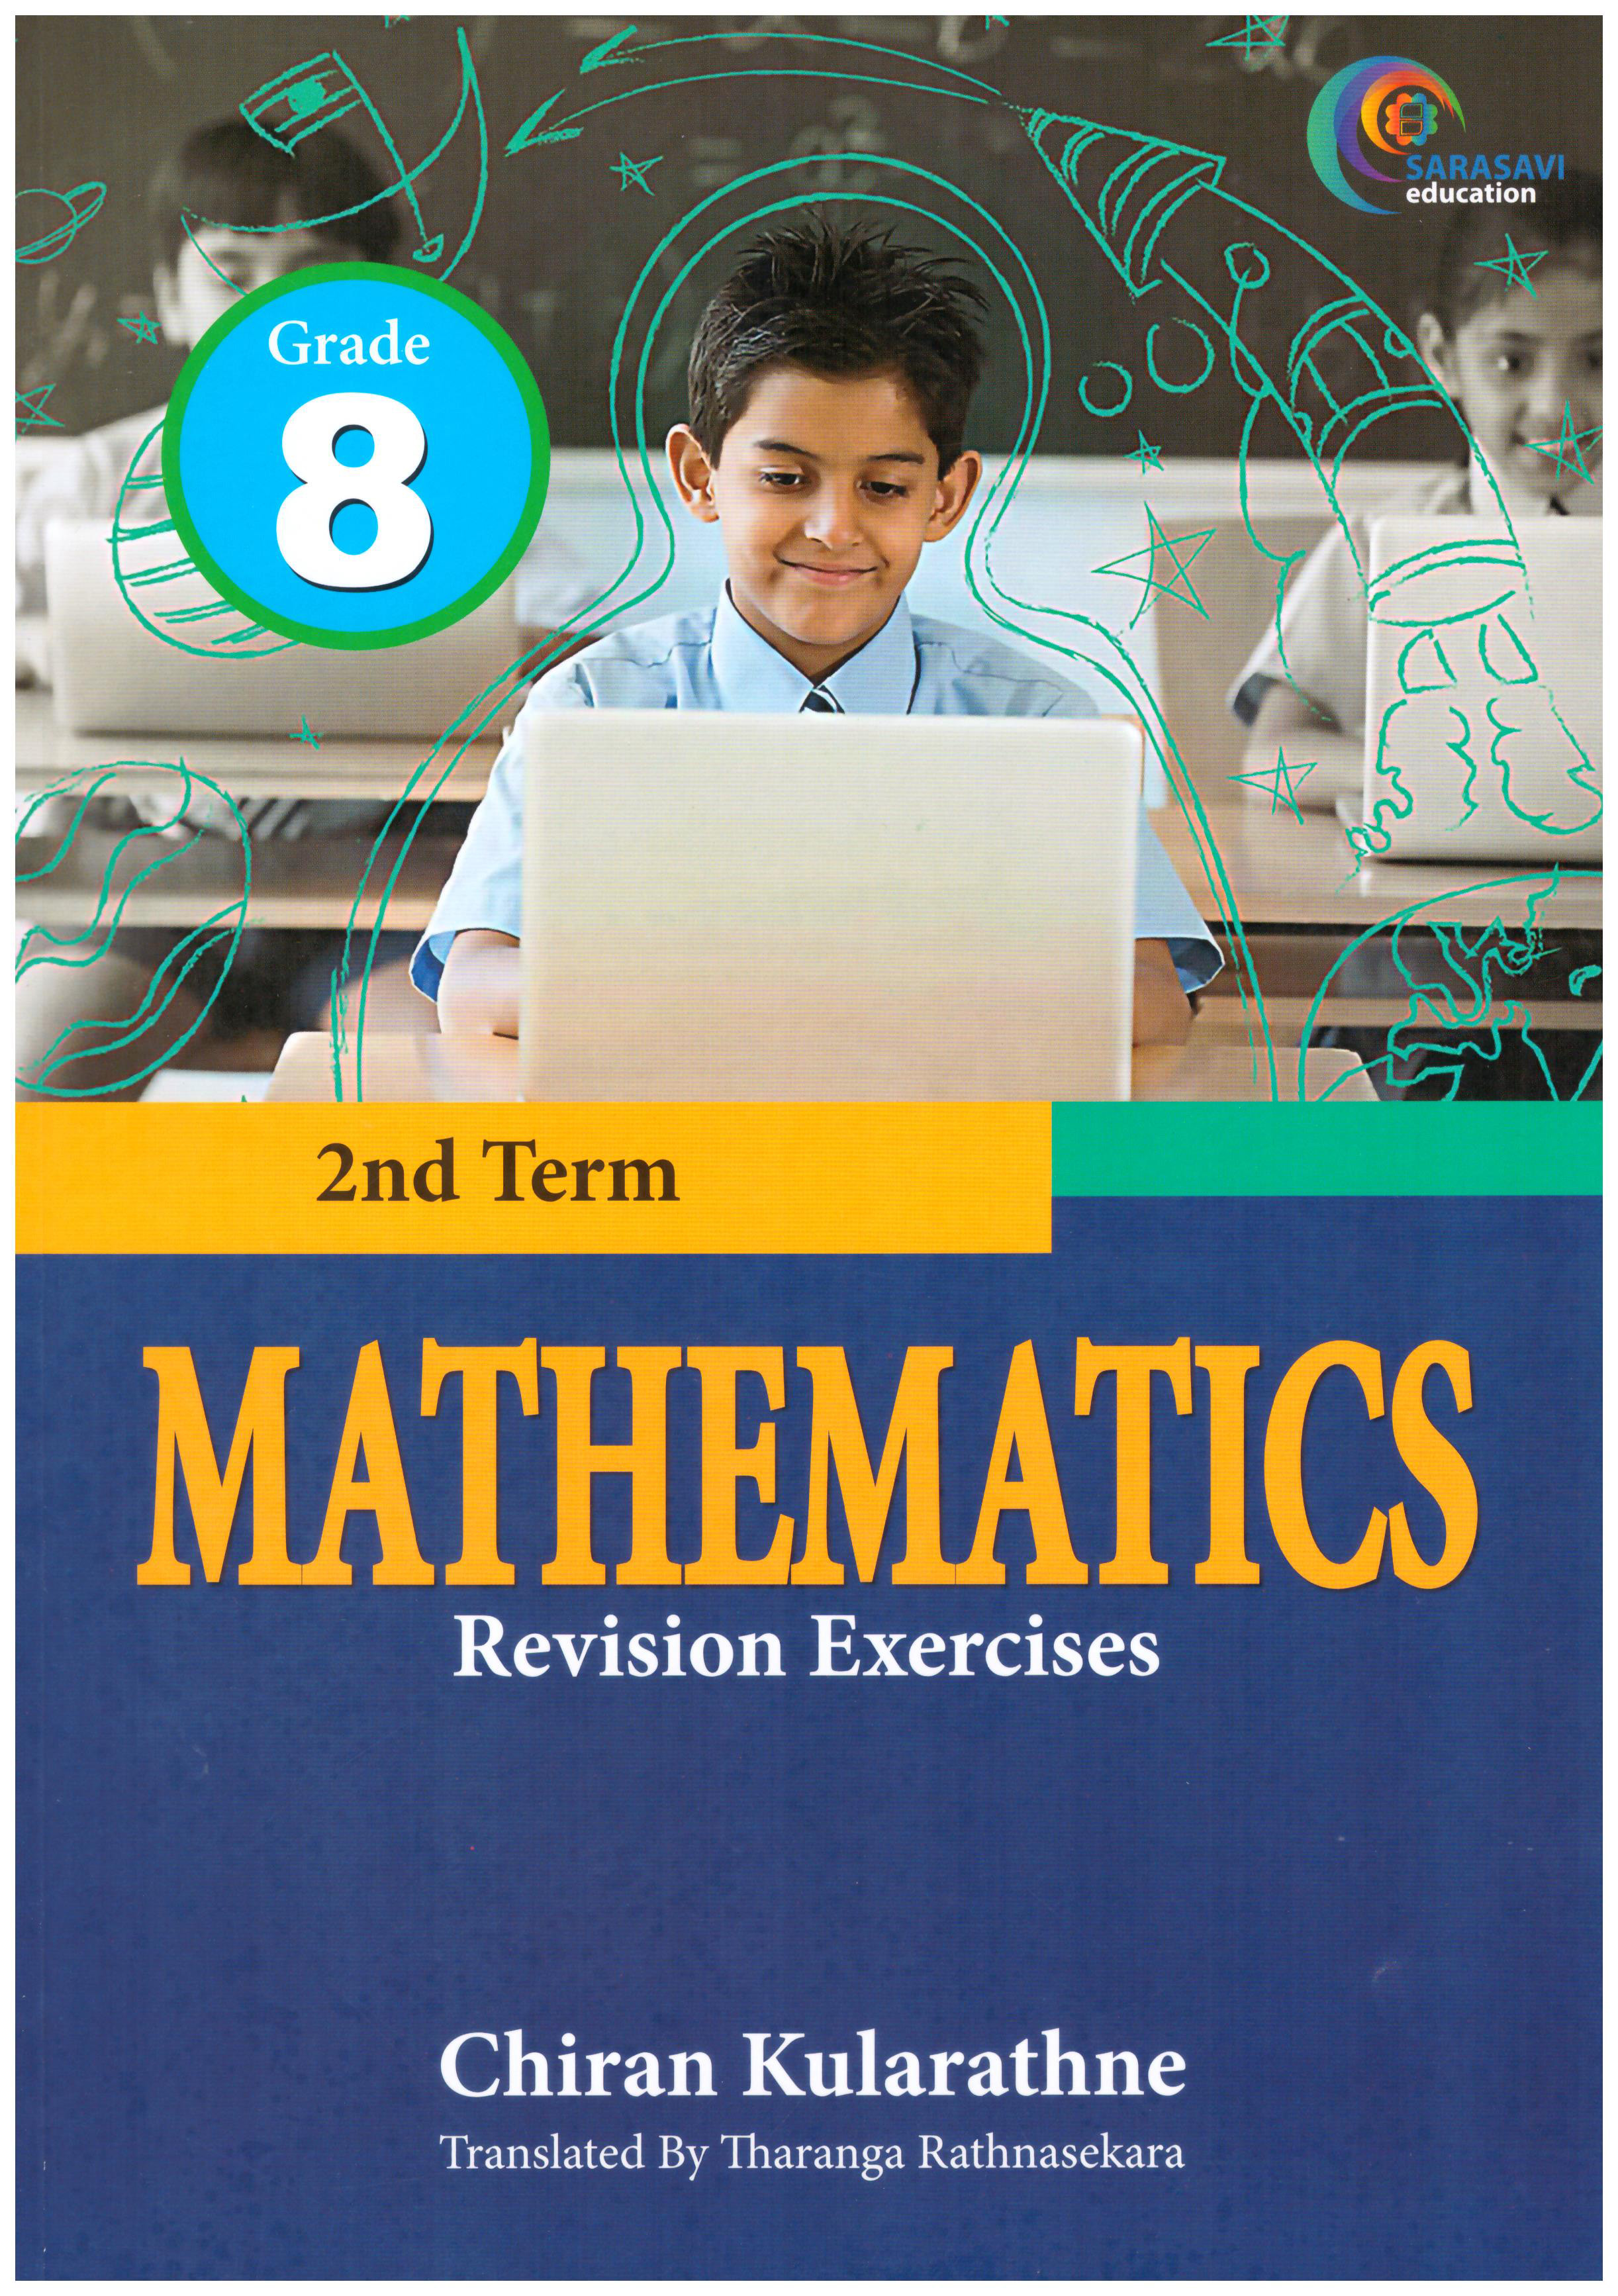 Grade 8 Mathematics Revision Exercises 2nd Term